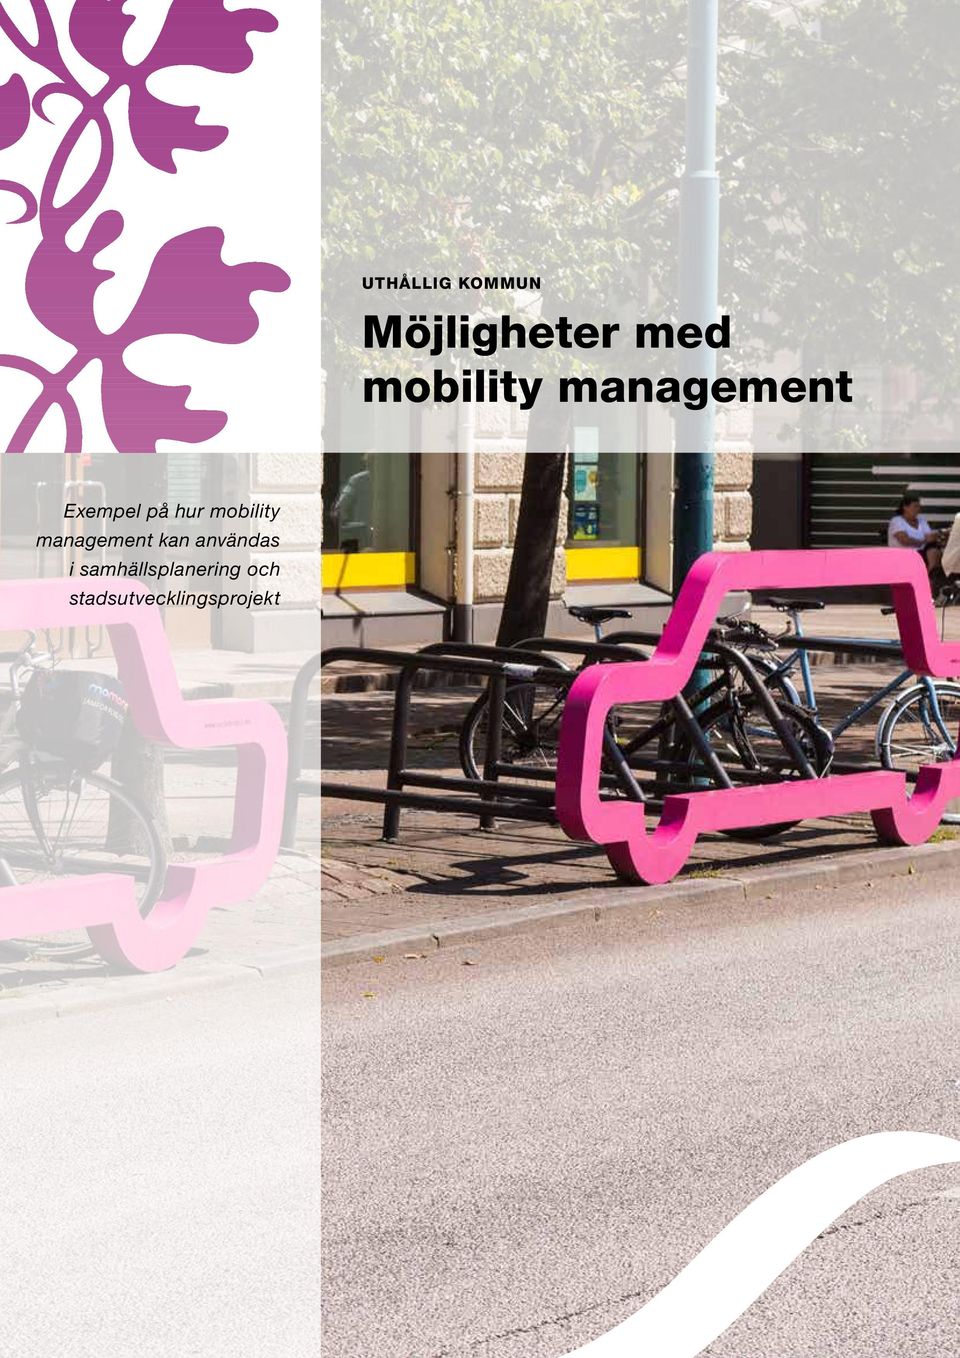 mobility management kan användas i